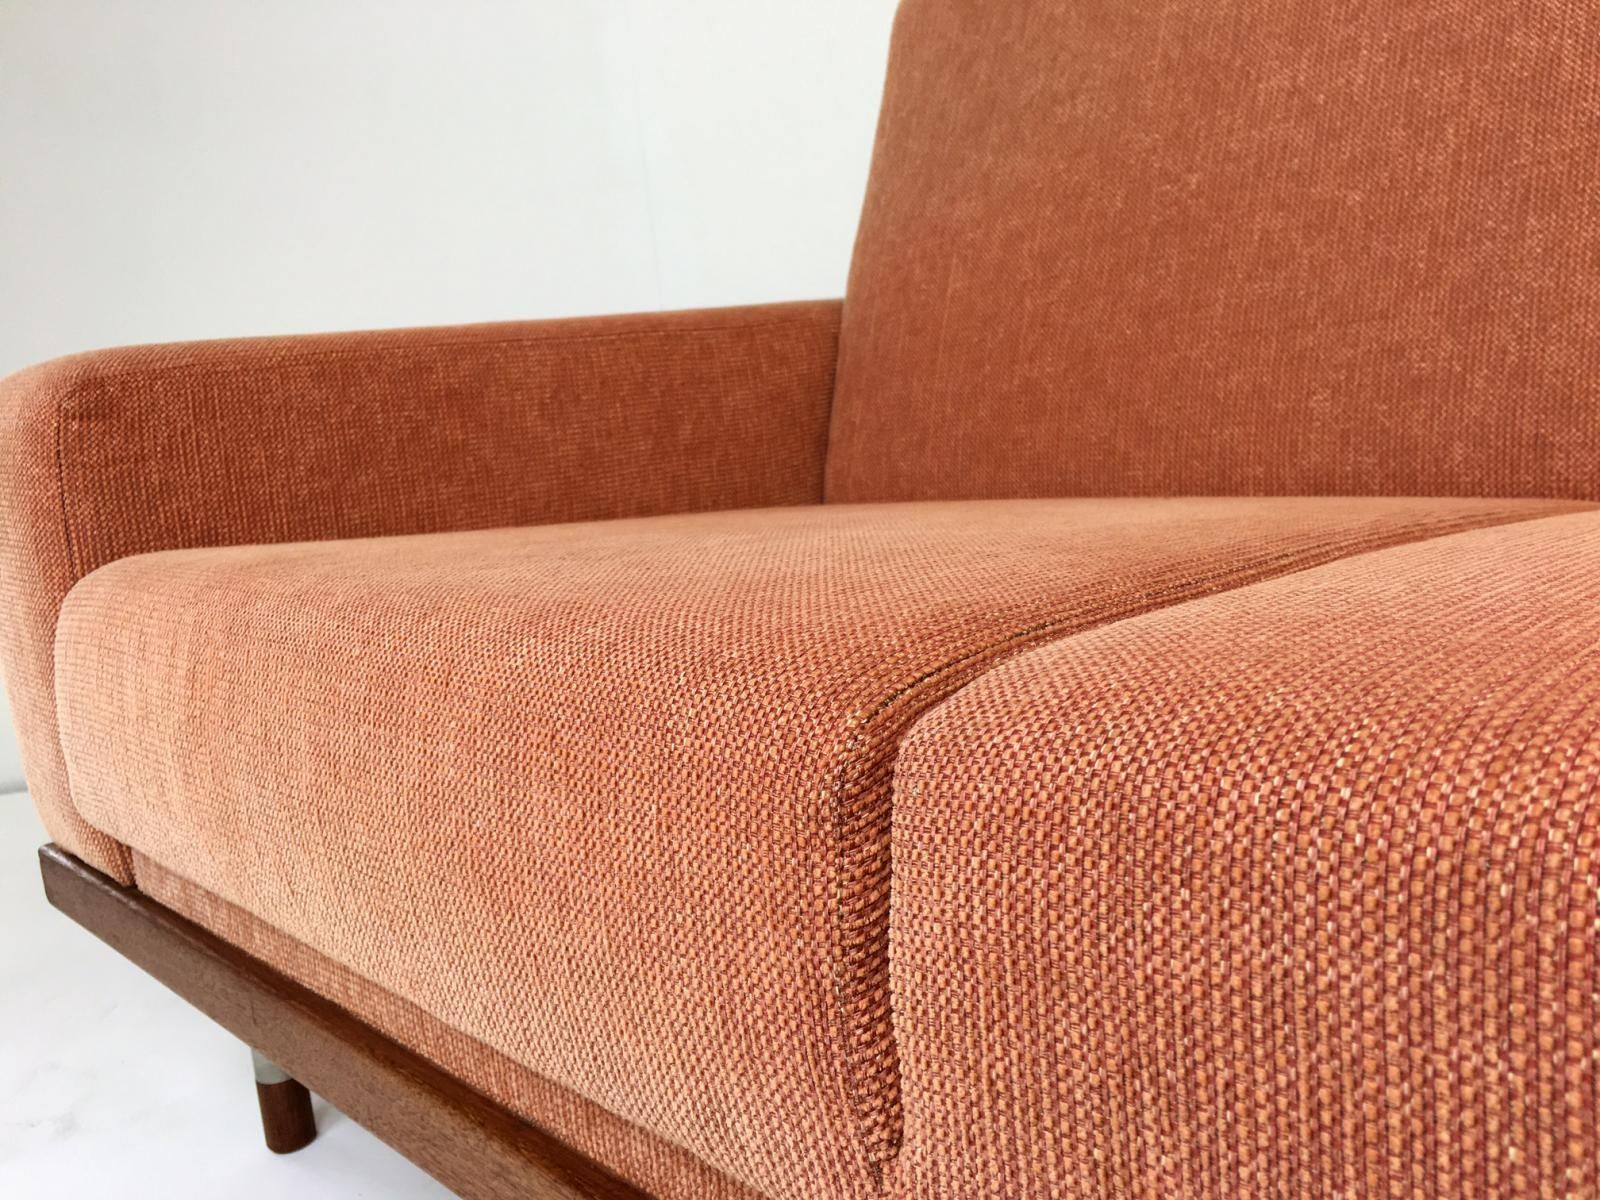 Teak Four Seater Sofa, 1960s For Sale At Pamono Throughout Four Seater Sofas (View 18 of 20)